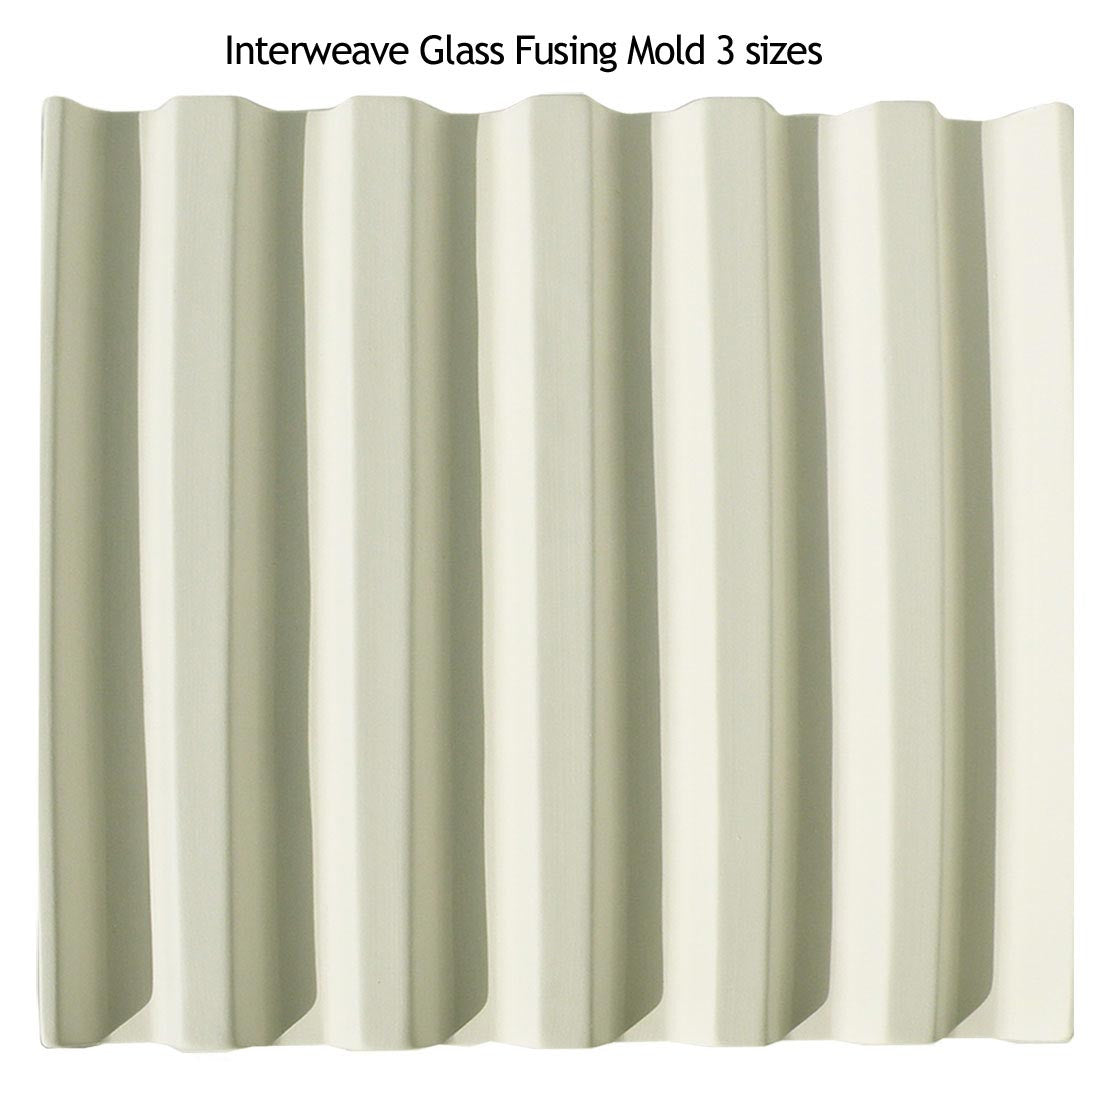 Glass Drape Mold - Inter-Weave Rectangular 3 Sizes: Small 5 1/2", Medium 9", Large 11"